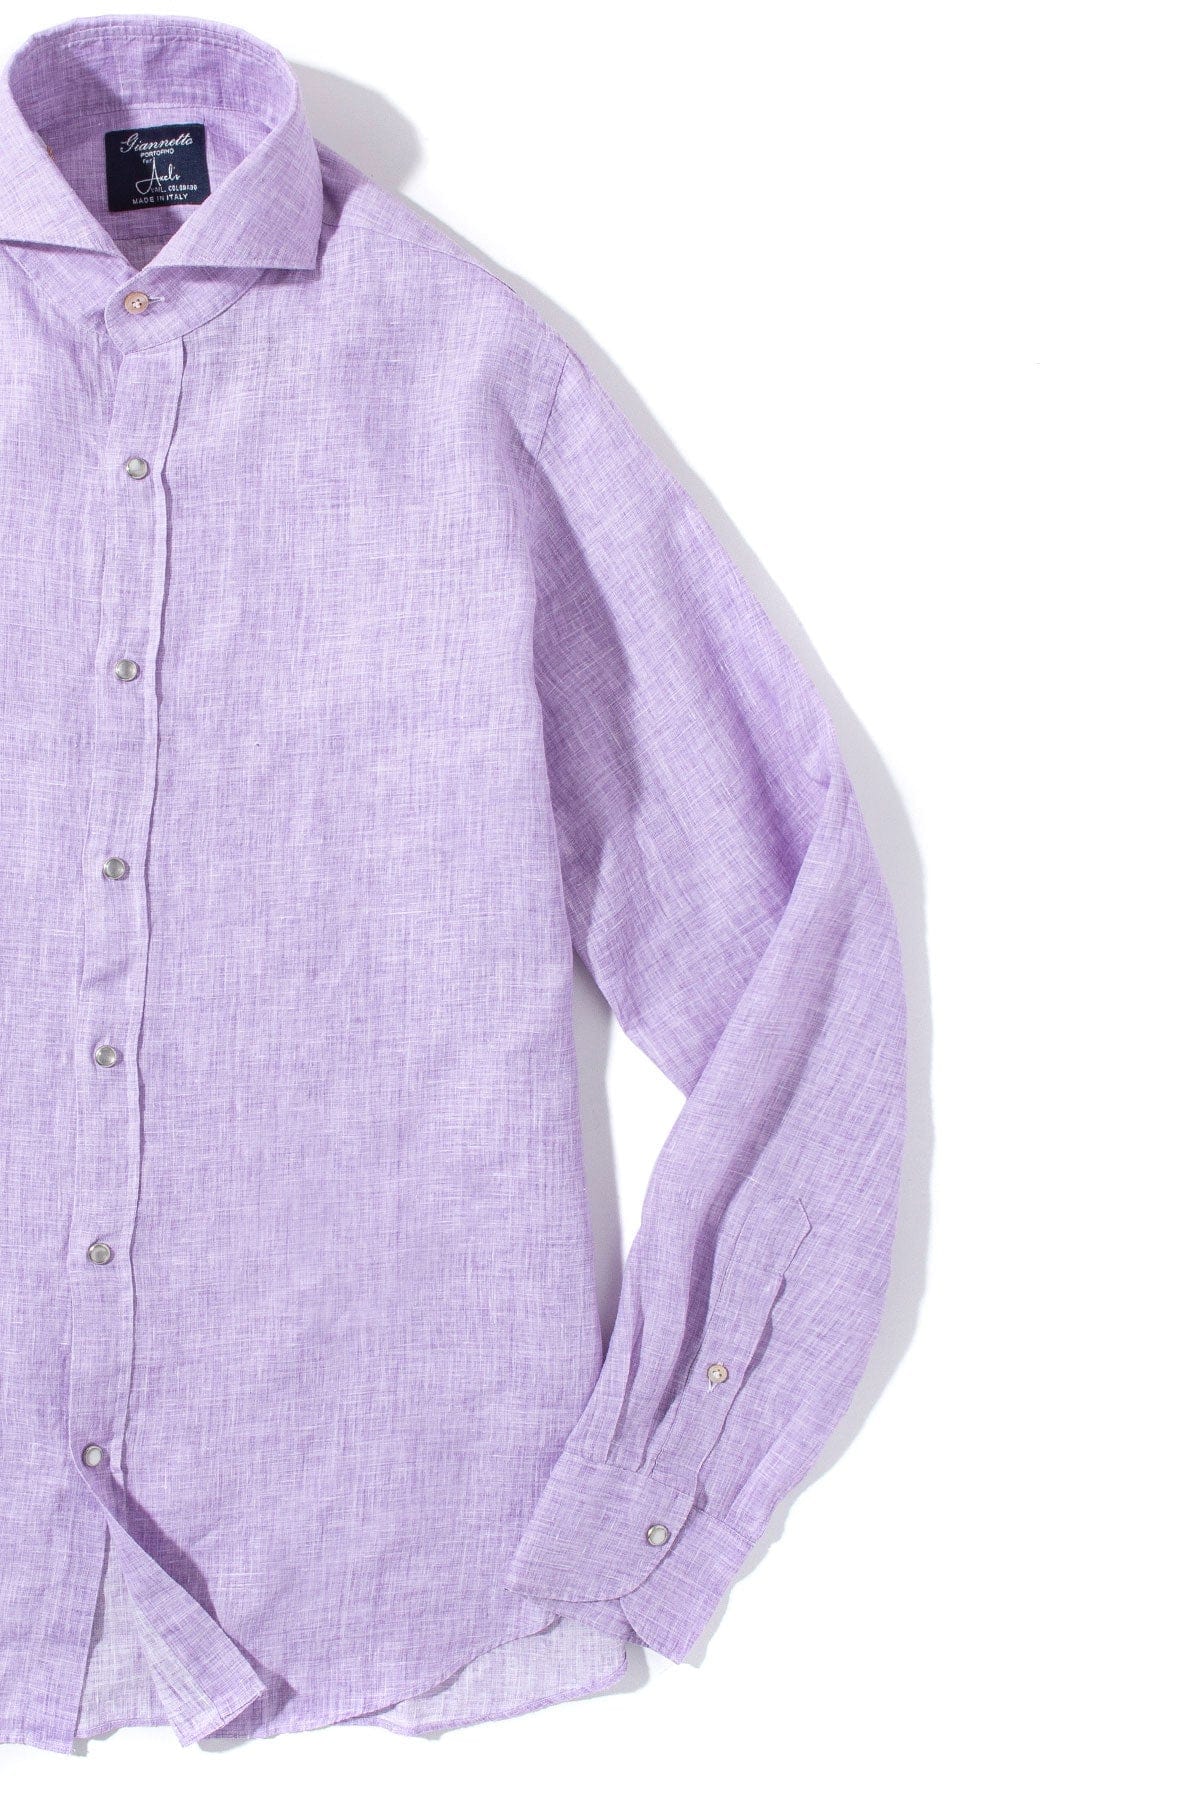 Sorgue Linen Shirt In Lavender - AXEL'S